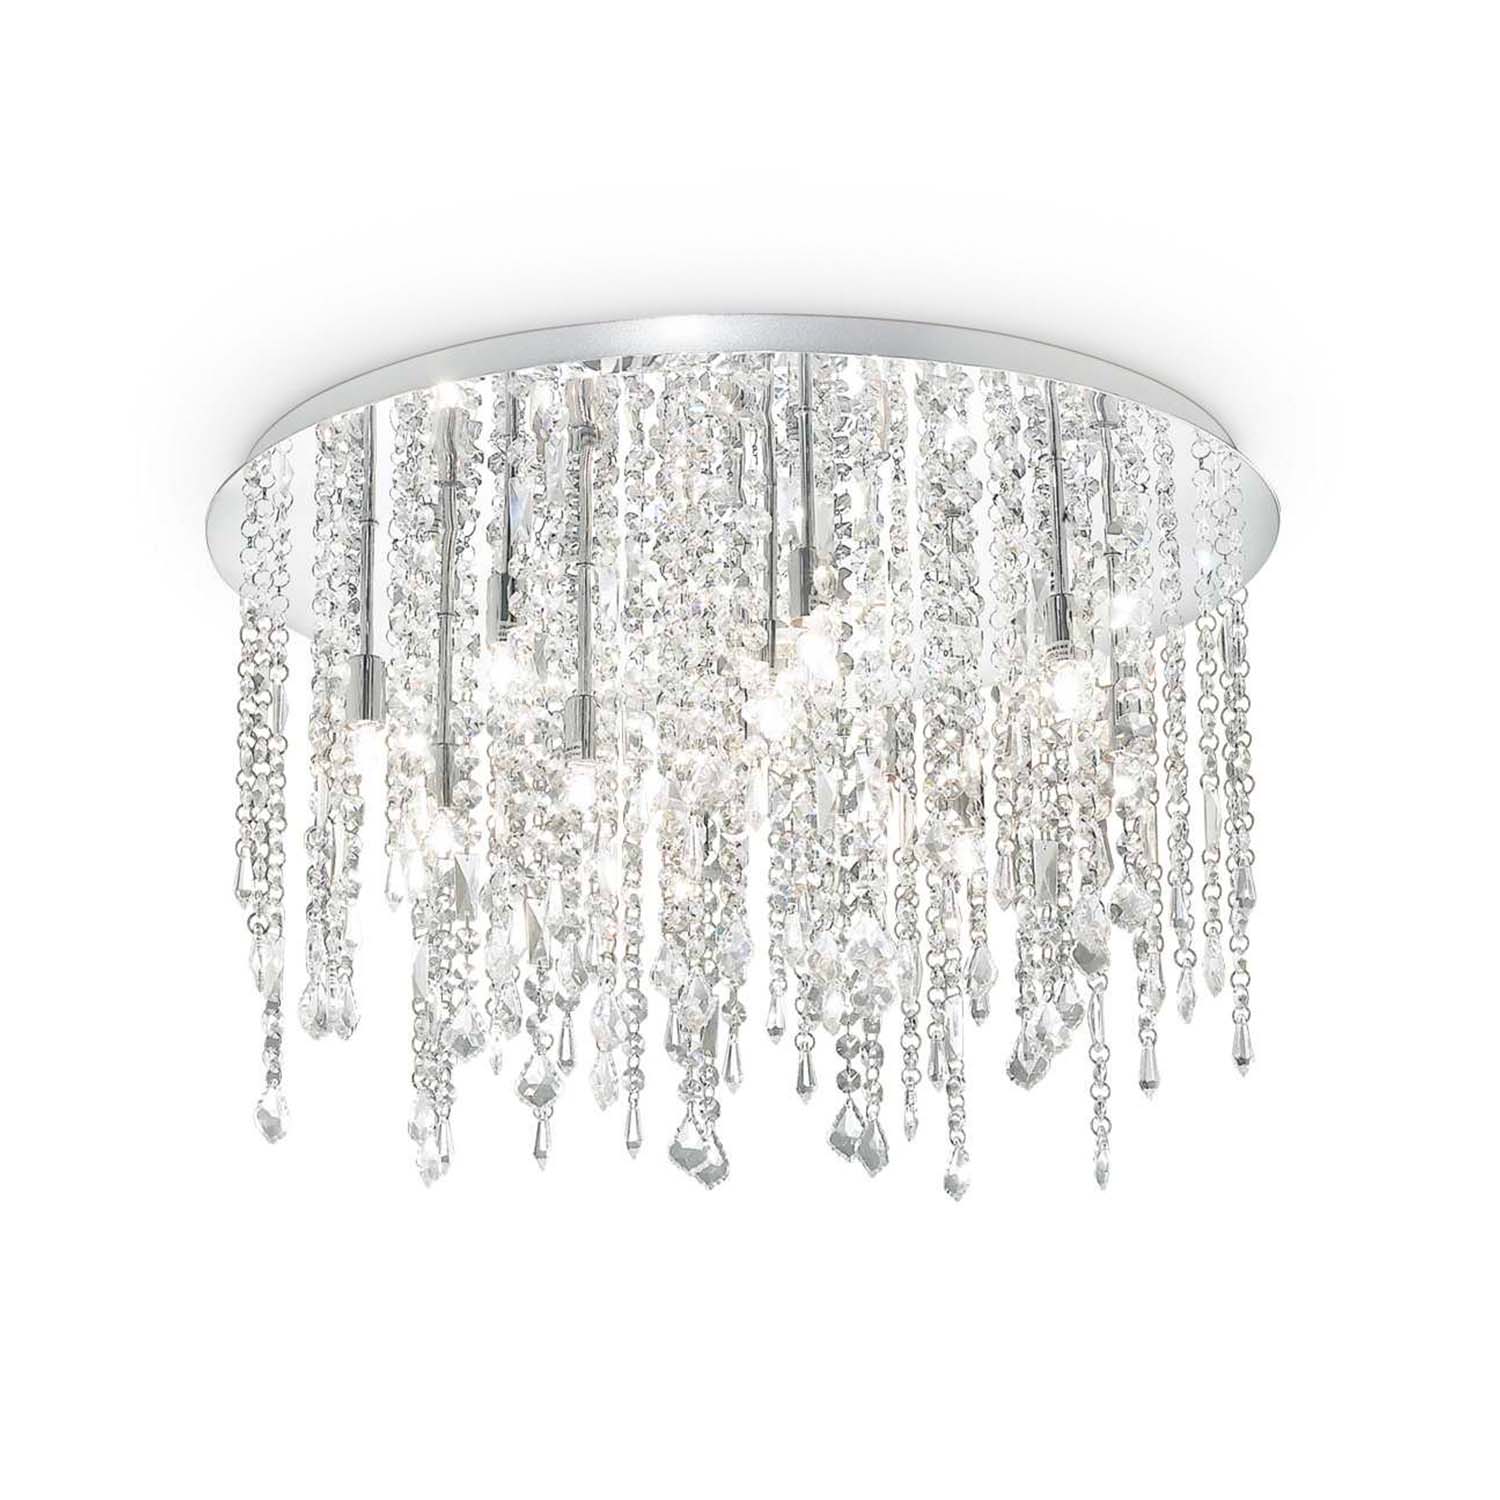 ROYAL - Chrome ceiling light with crystal pendants